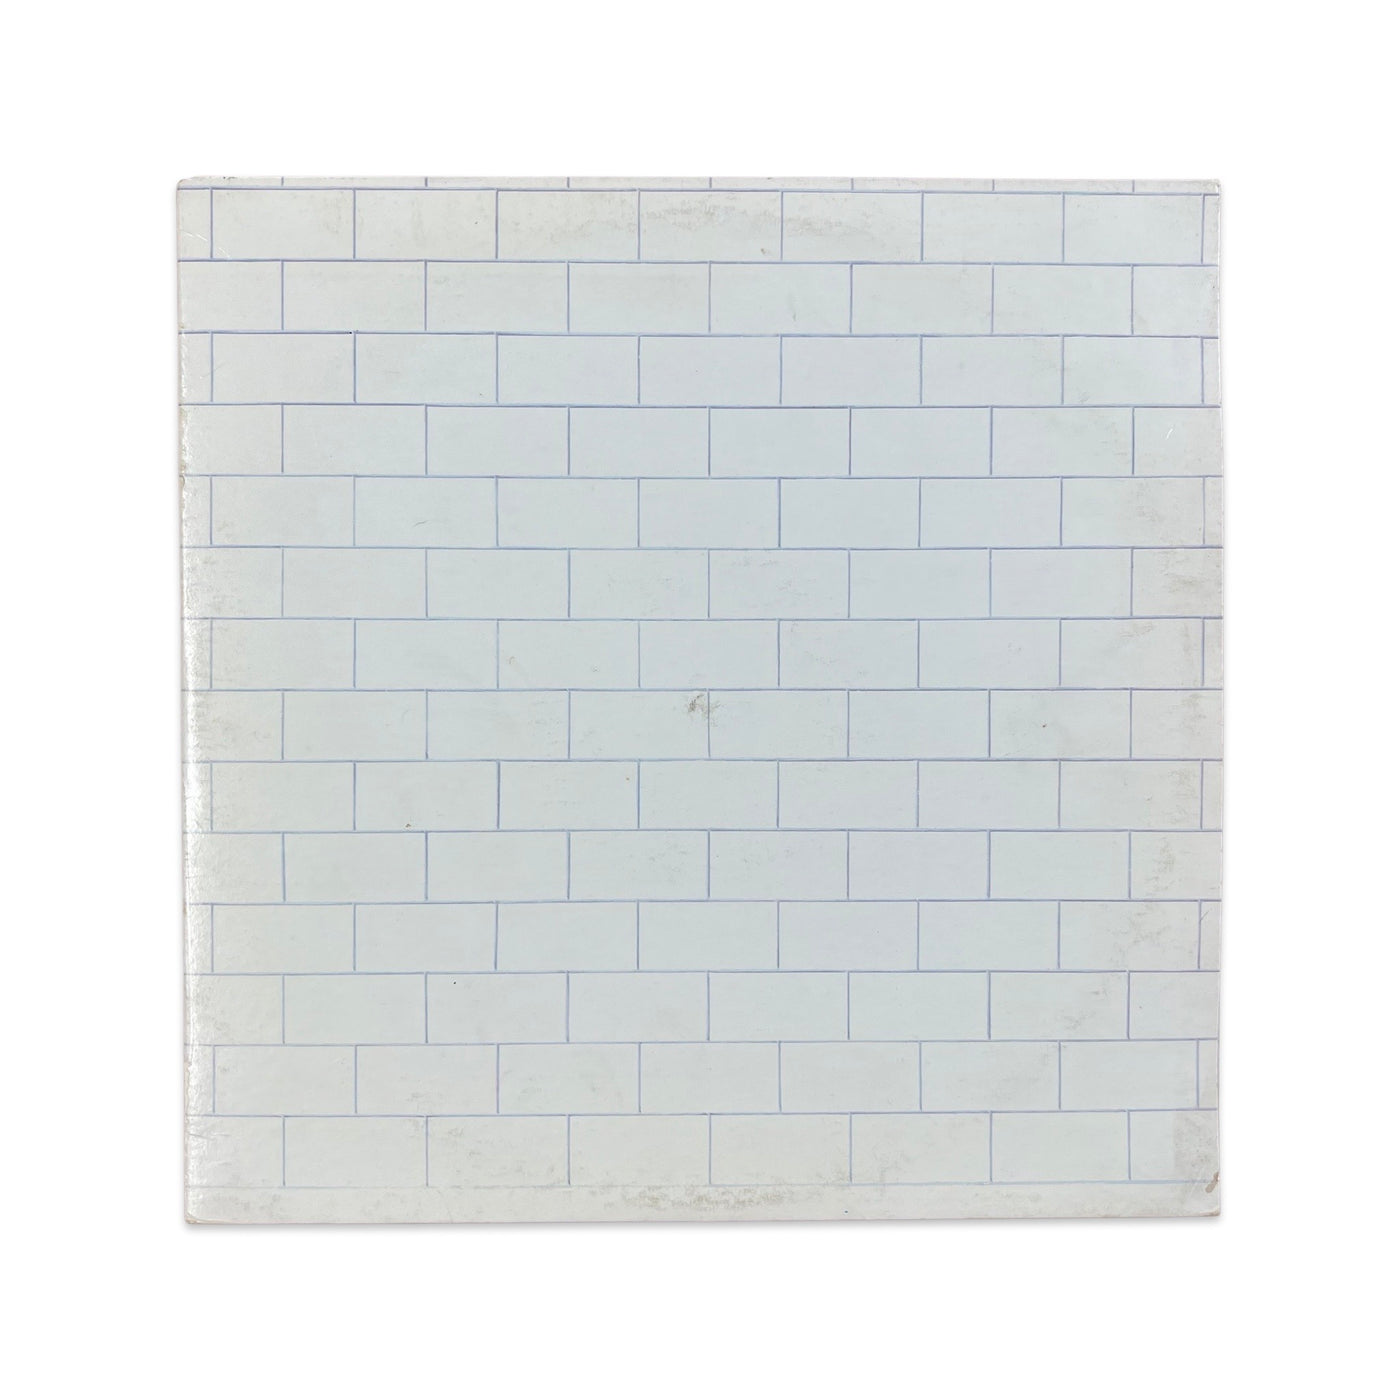 Pink Floyd - The Wall - 1979 Pitman Pressing